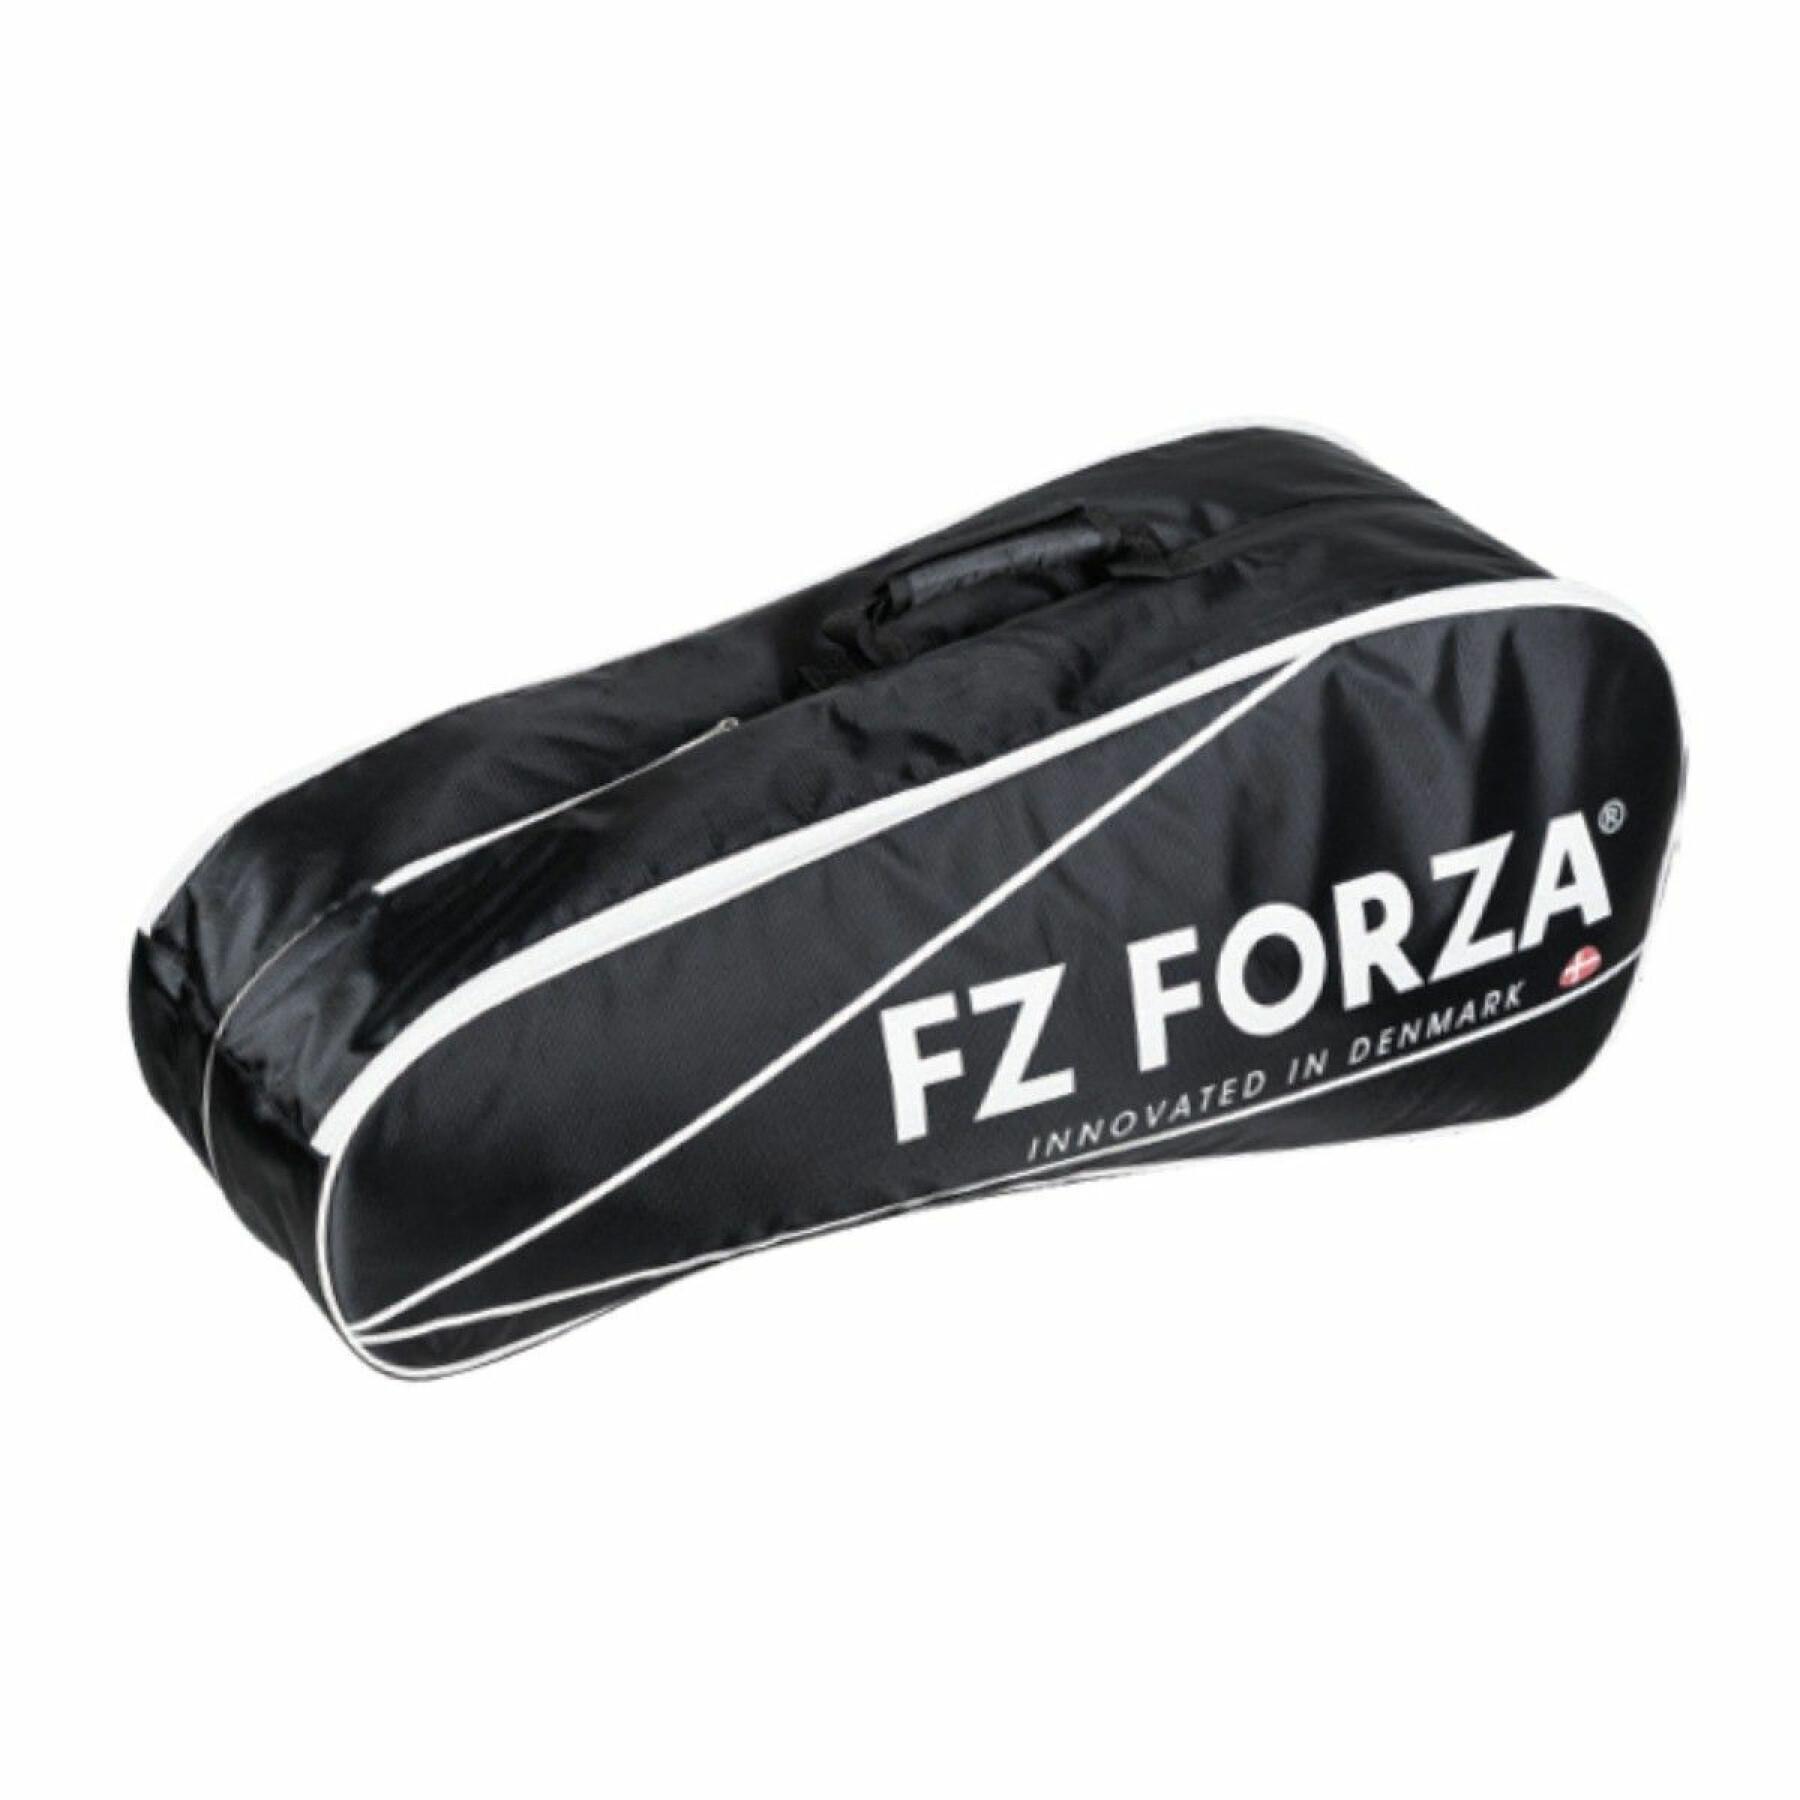 Bolsa de raquetas de bádminton FZ Forza Martak